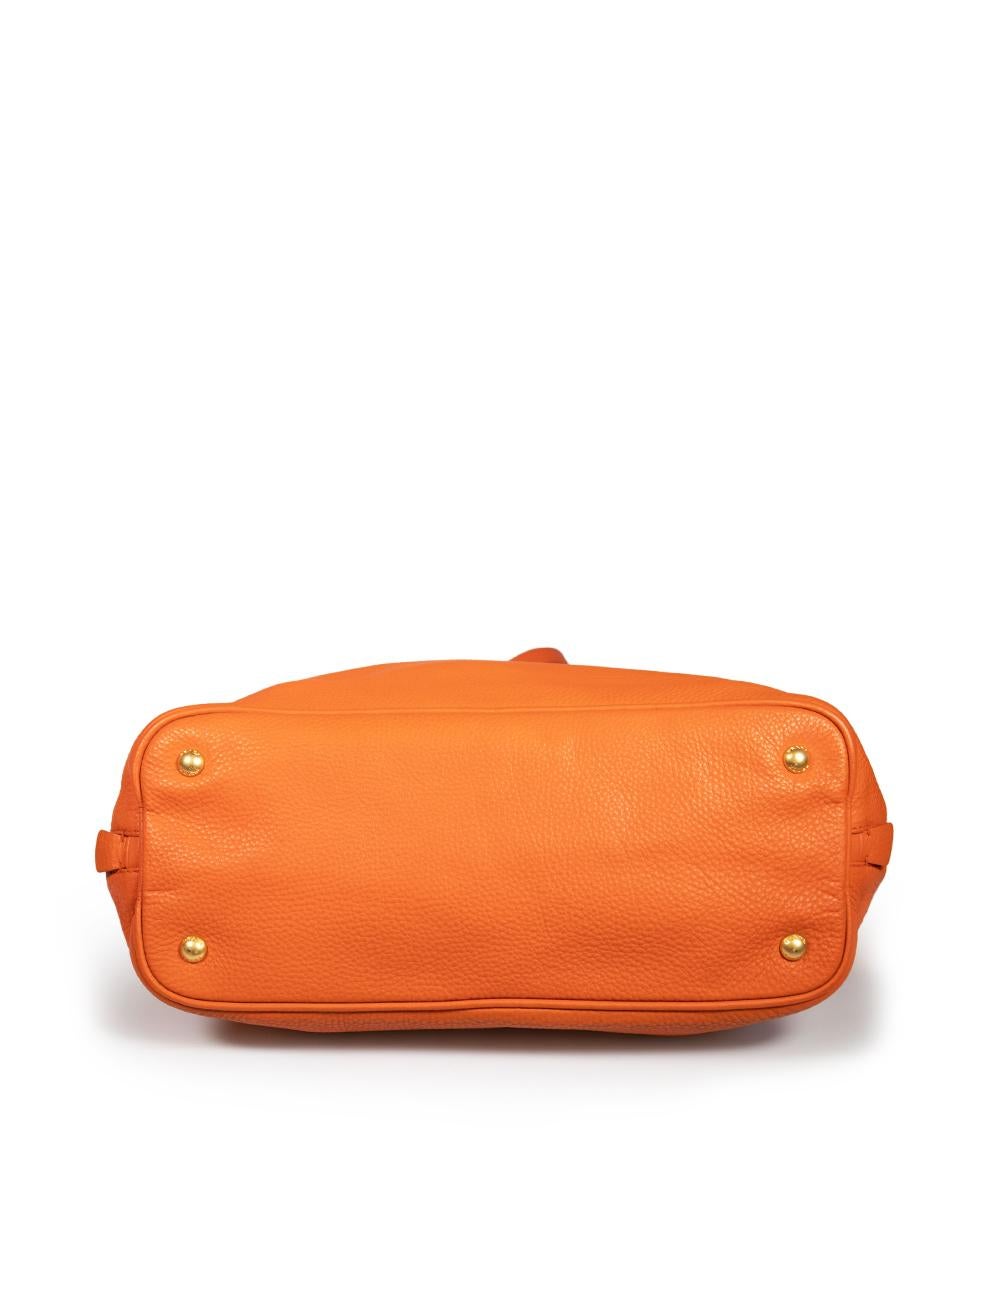 Women's Prada Orange Leather Vitello Daino Tote For Sale